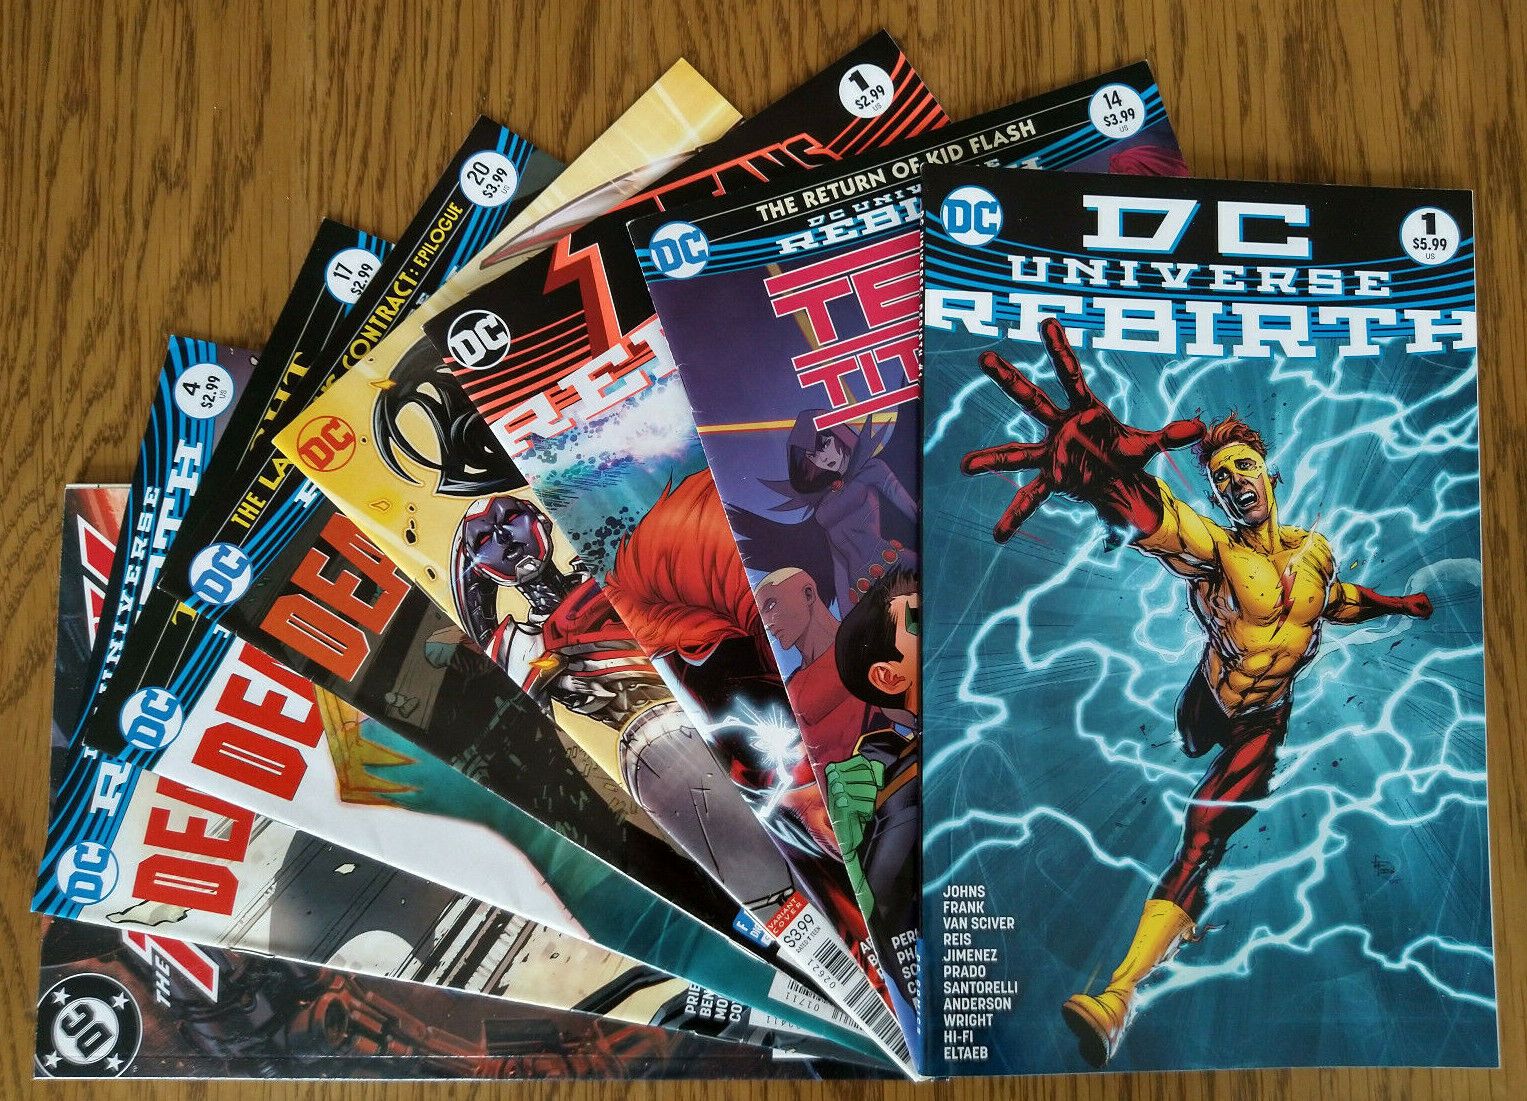 DC COMICS REBIRTH FLASH & TEEN TITANS JOB LOT - 8 VERY FINE ISSUE COLLECTION 